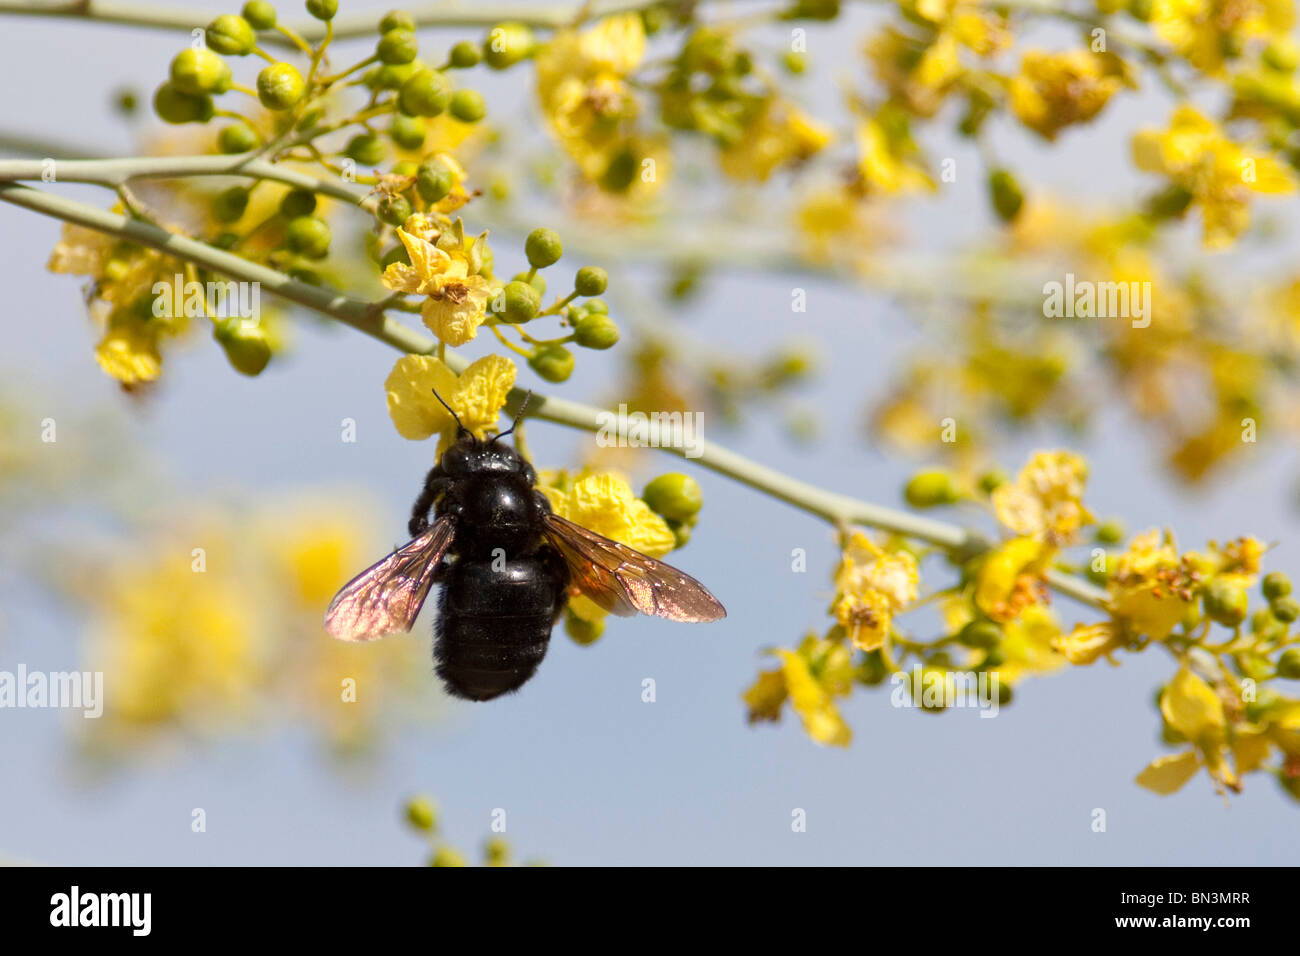 Insect on a blossom, Desert Botanical Garden, Phoenix, Arizona, USA, close-up Stock Photo